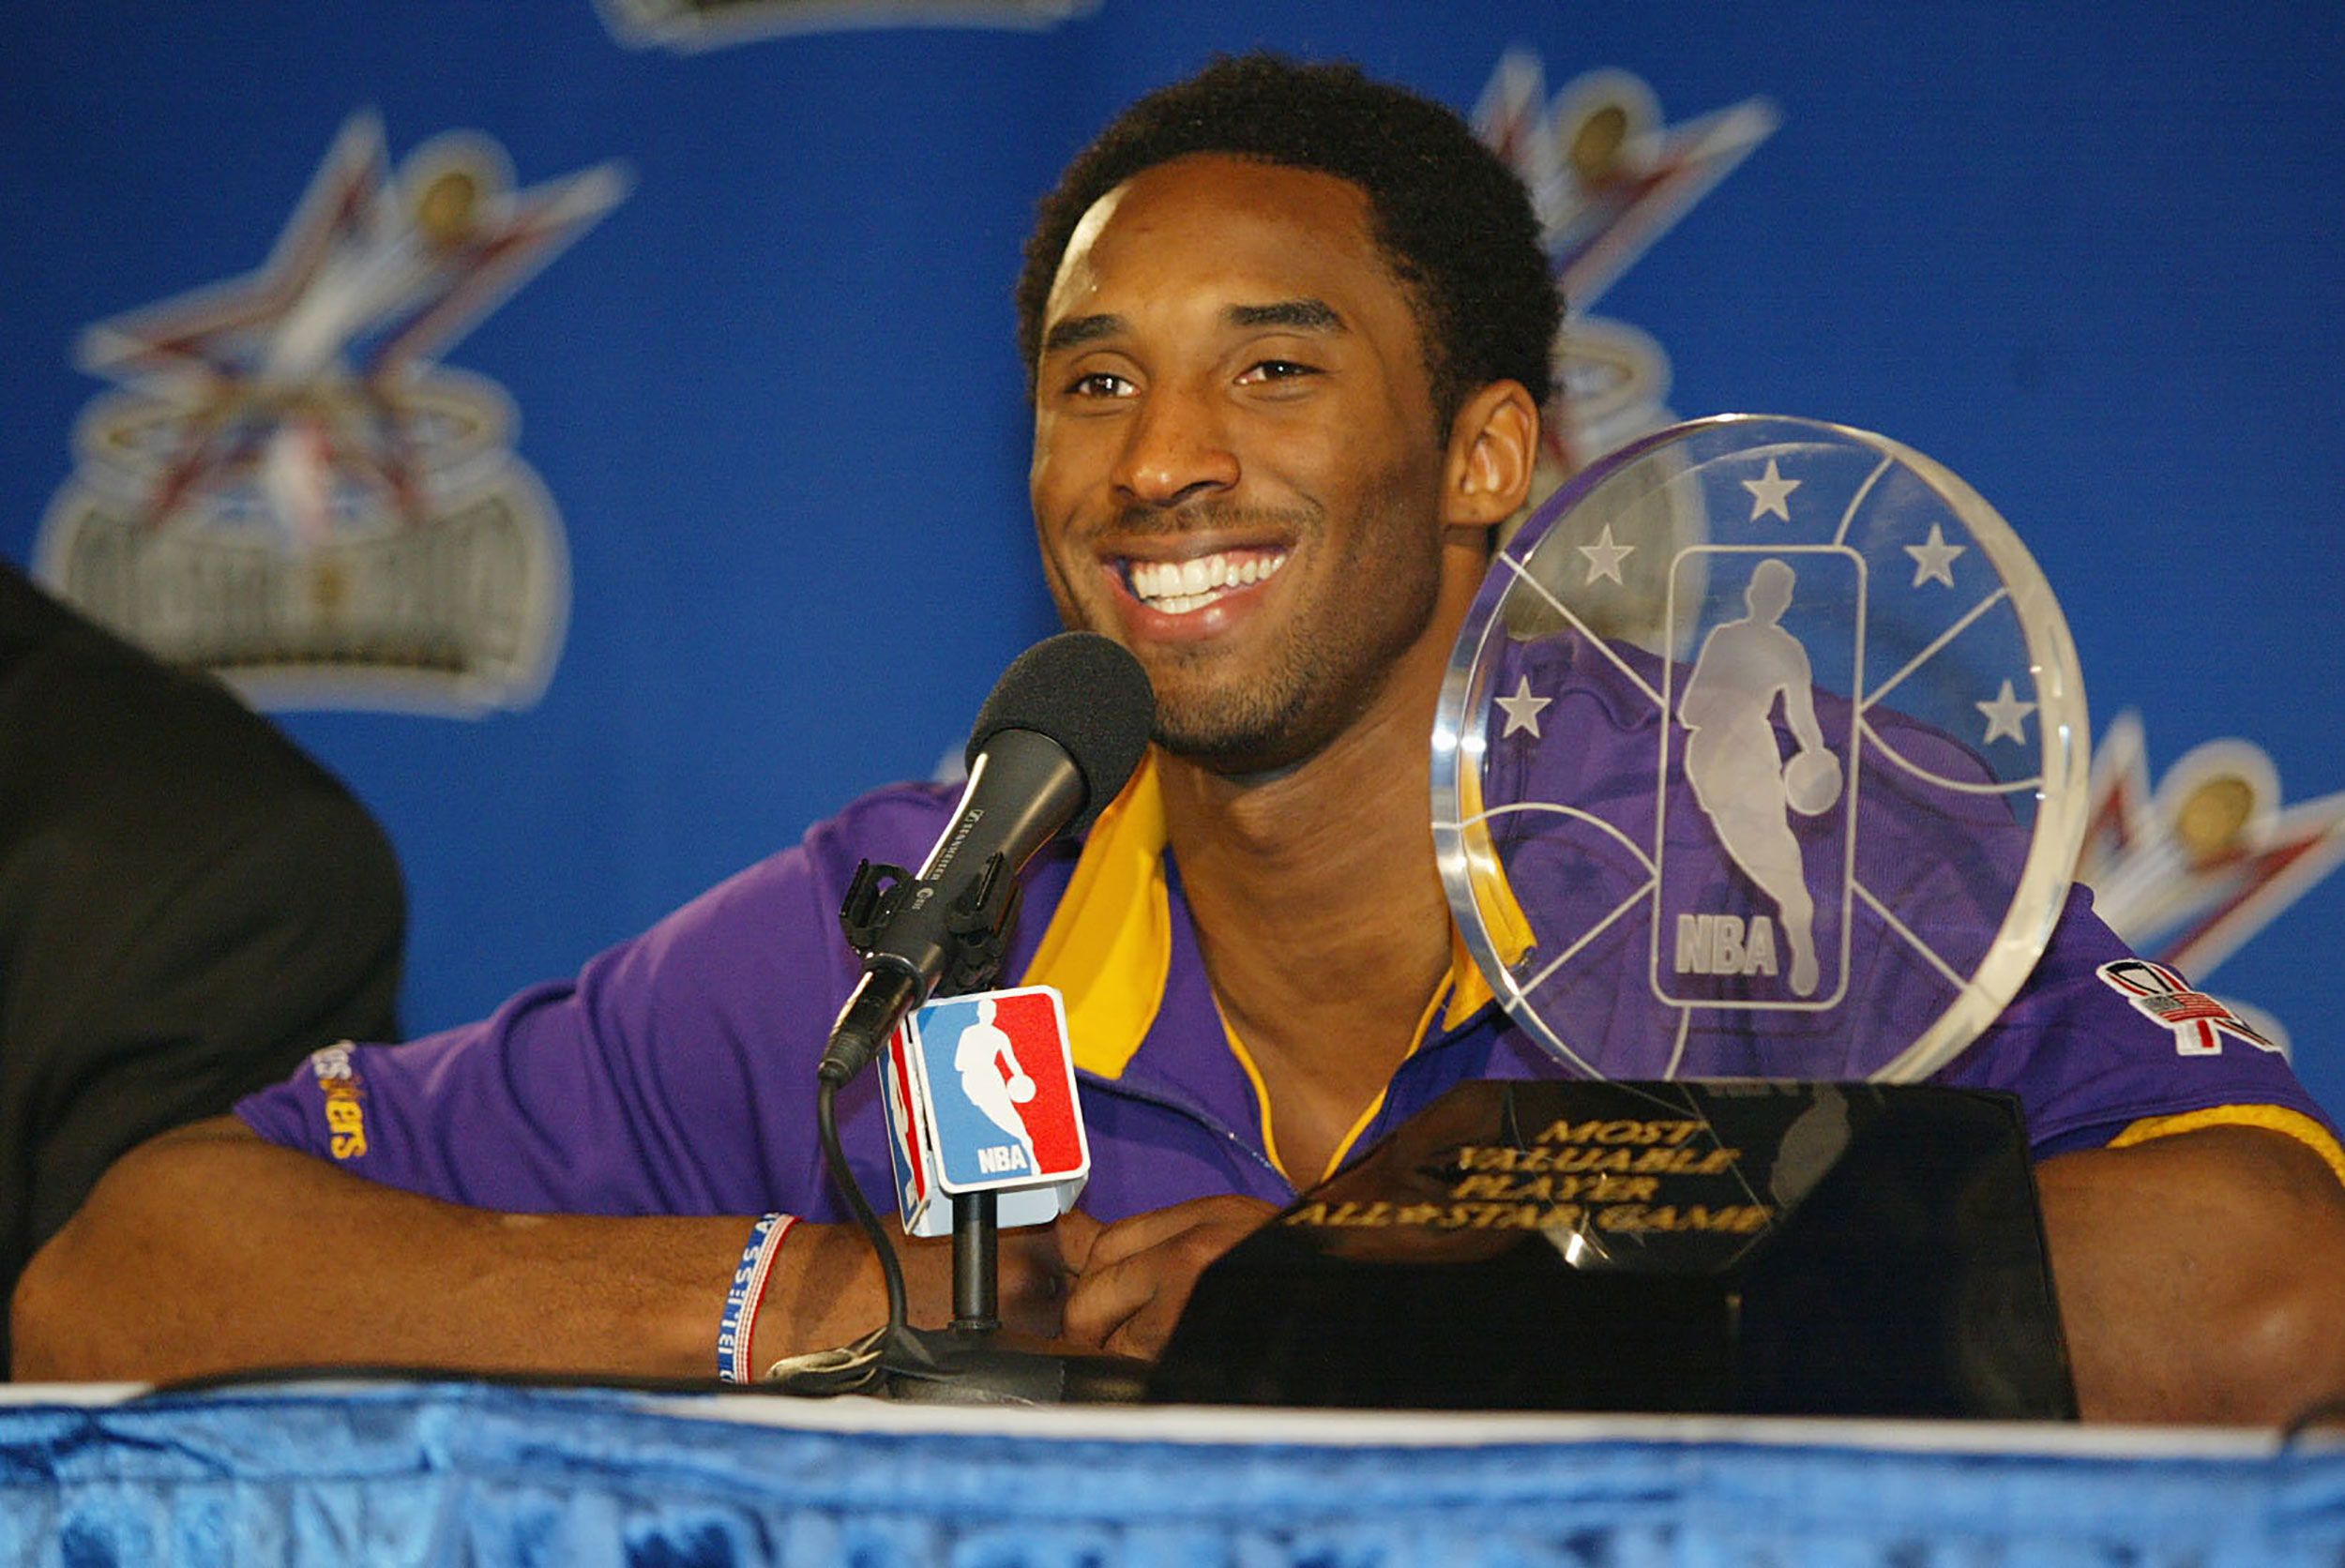 NBA All-Star Game MVP award named in honor of Kobe Bryant - ESPN